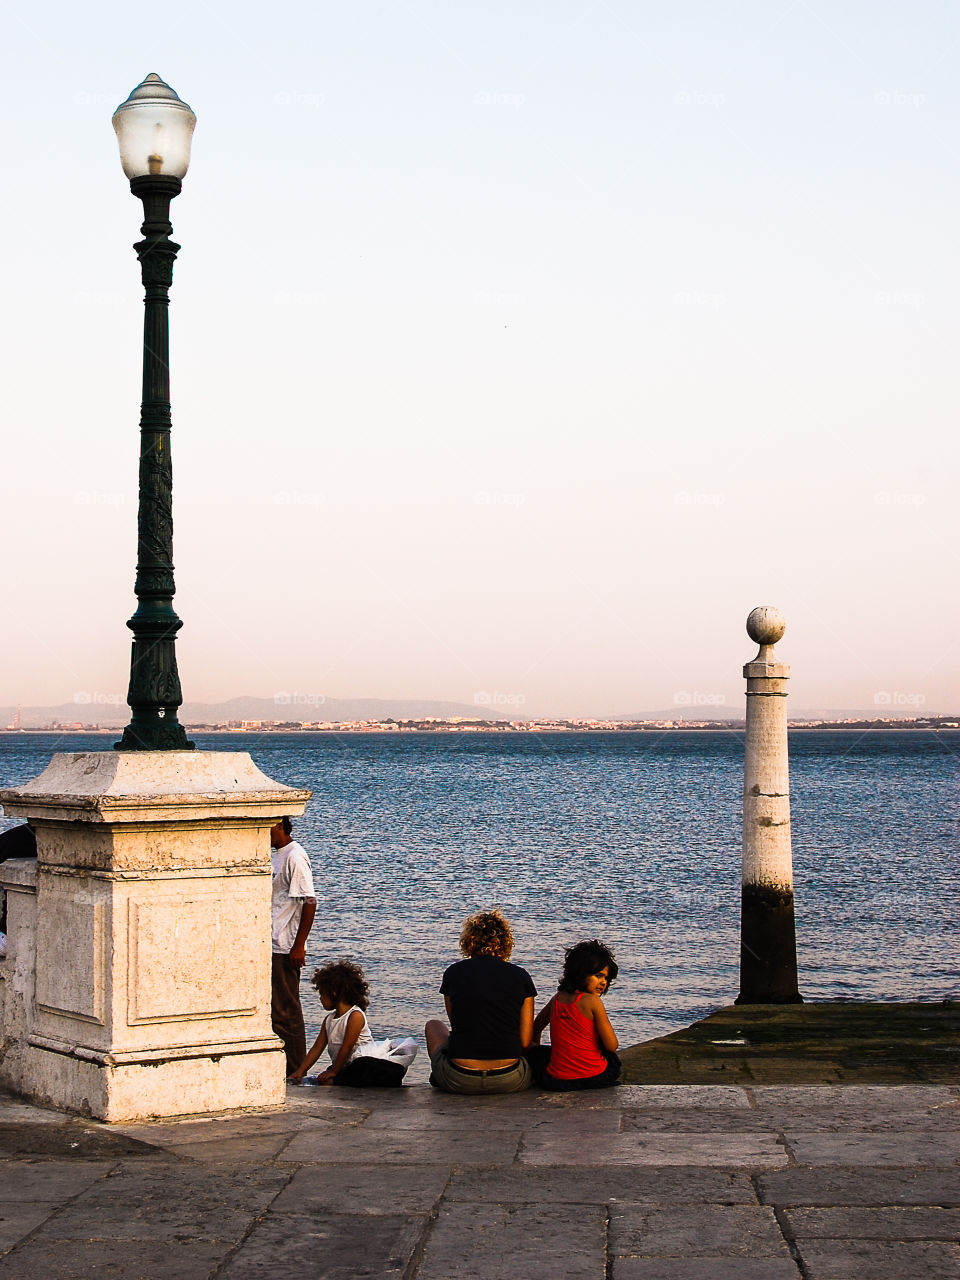 View on the Rio Tajo in Lisbon